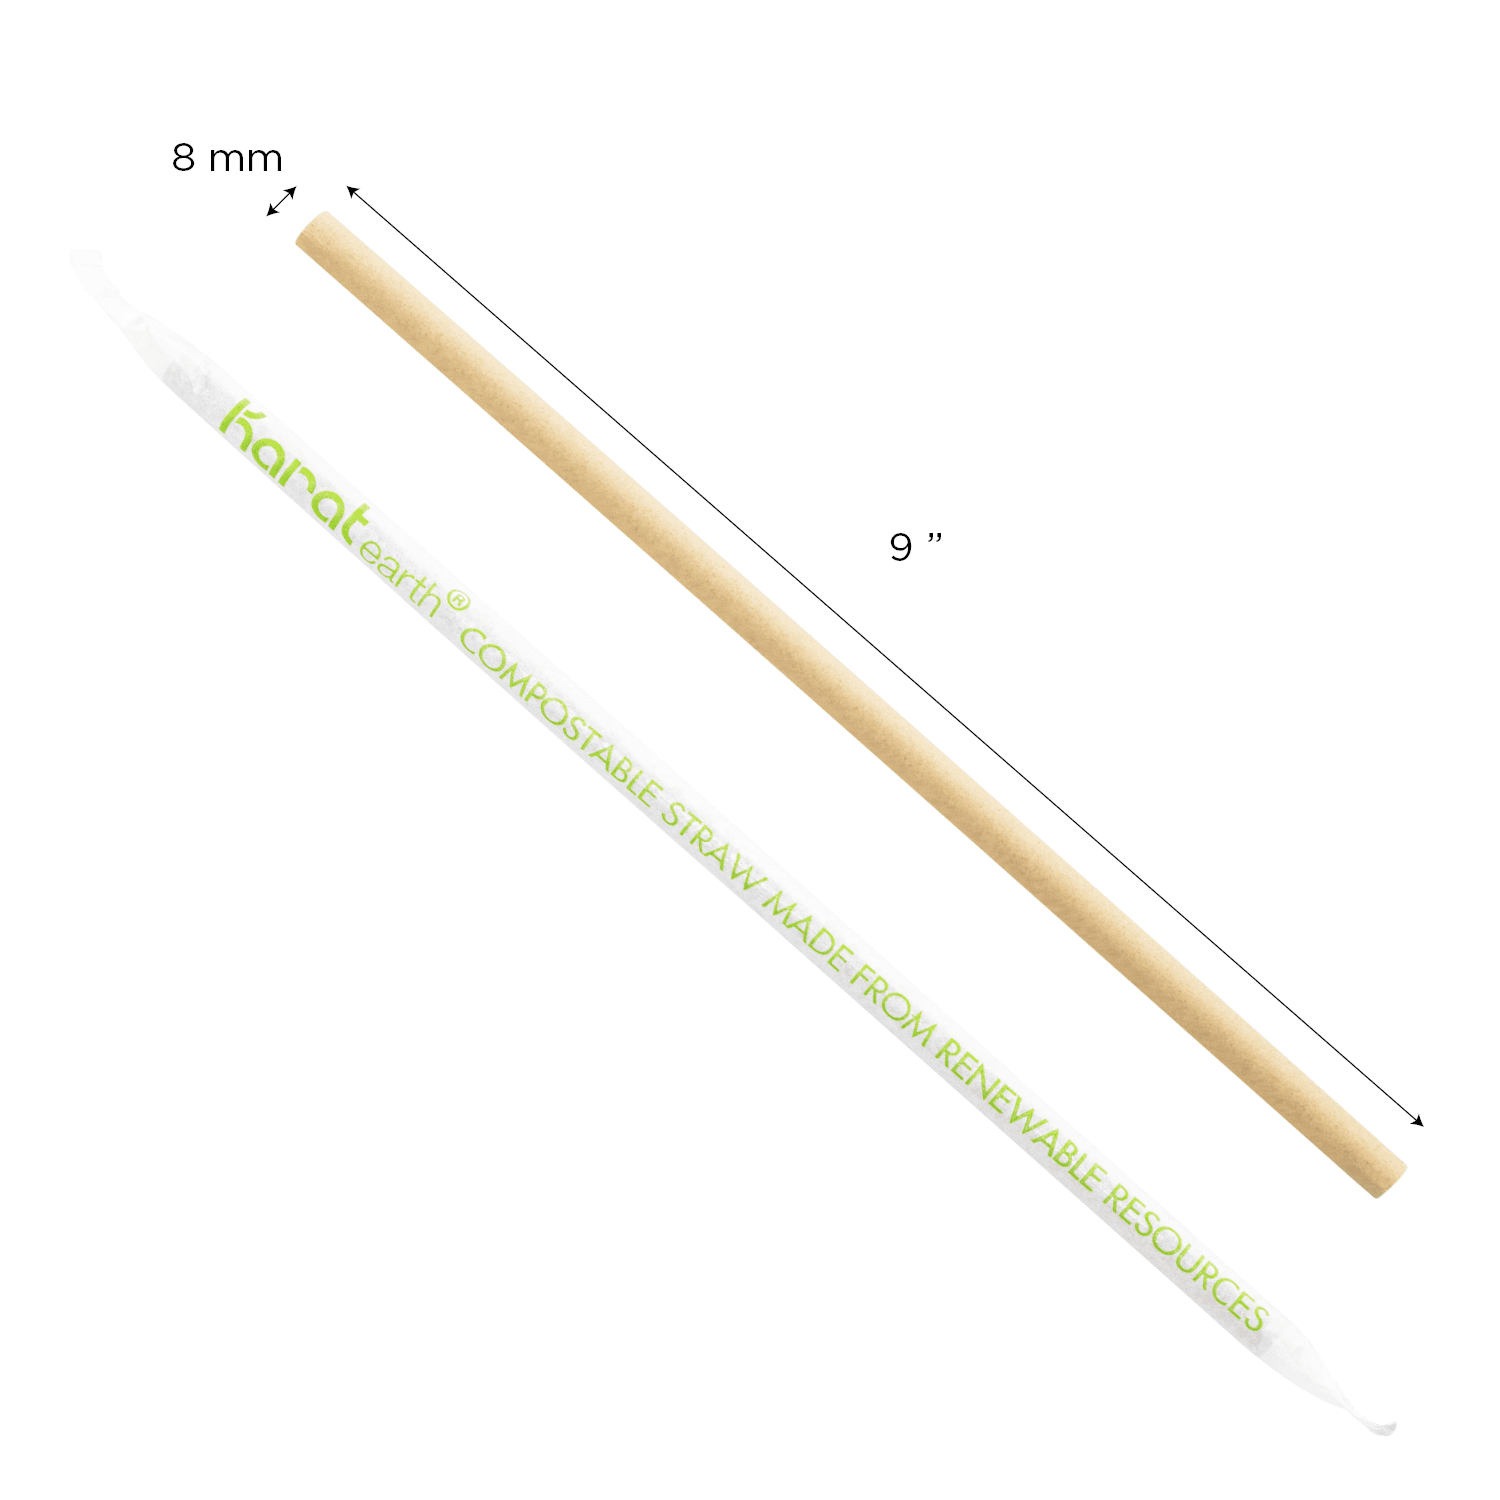 Karat Earth 9" Flat Cut Bamboo Fiber Giant Straws (8mm) Paper Wrapped, Natural - Bag of 150 pcs